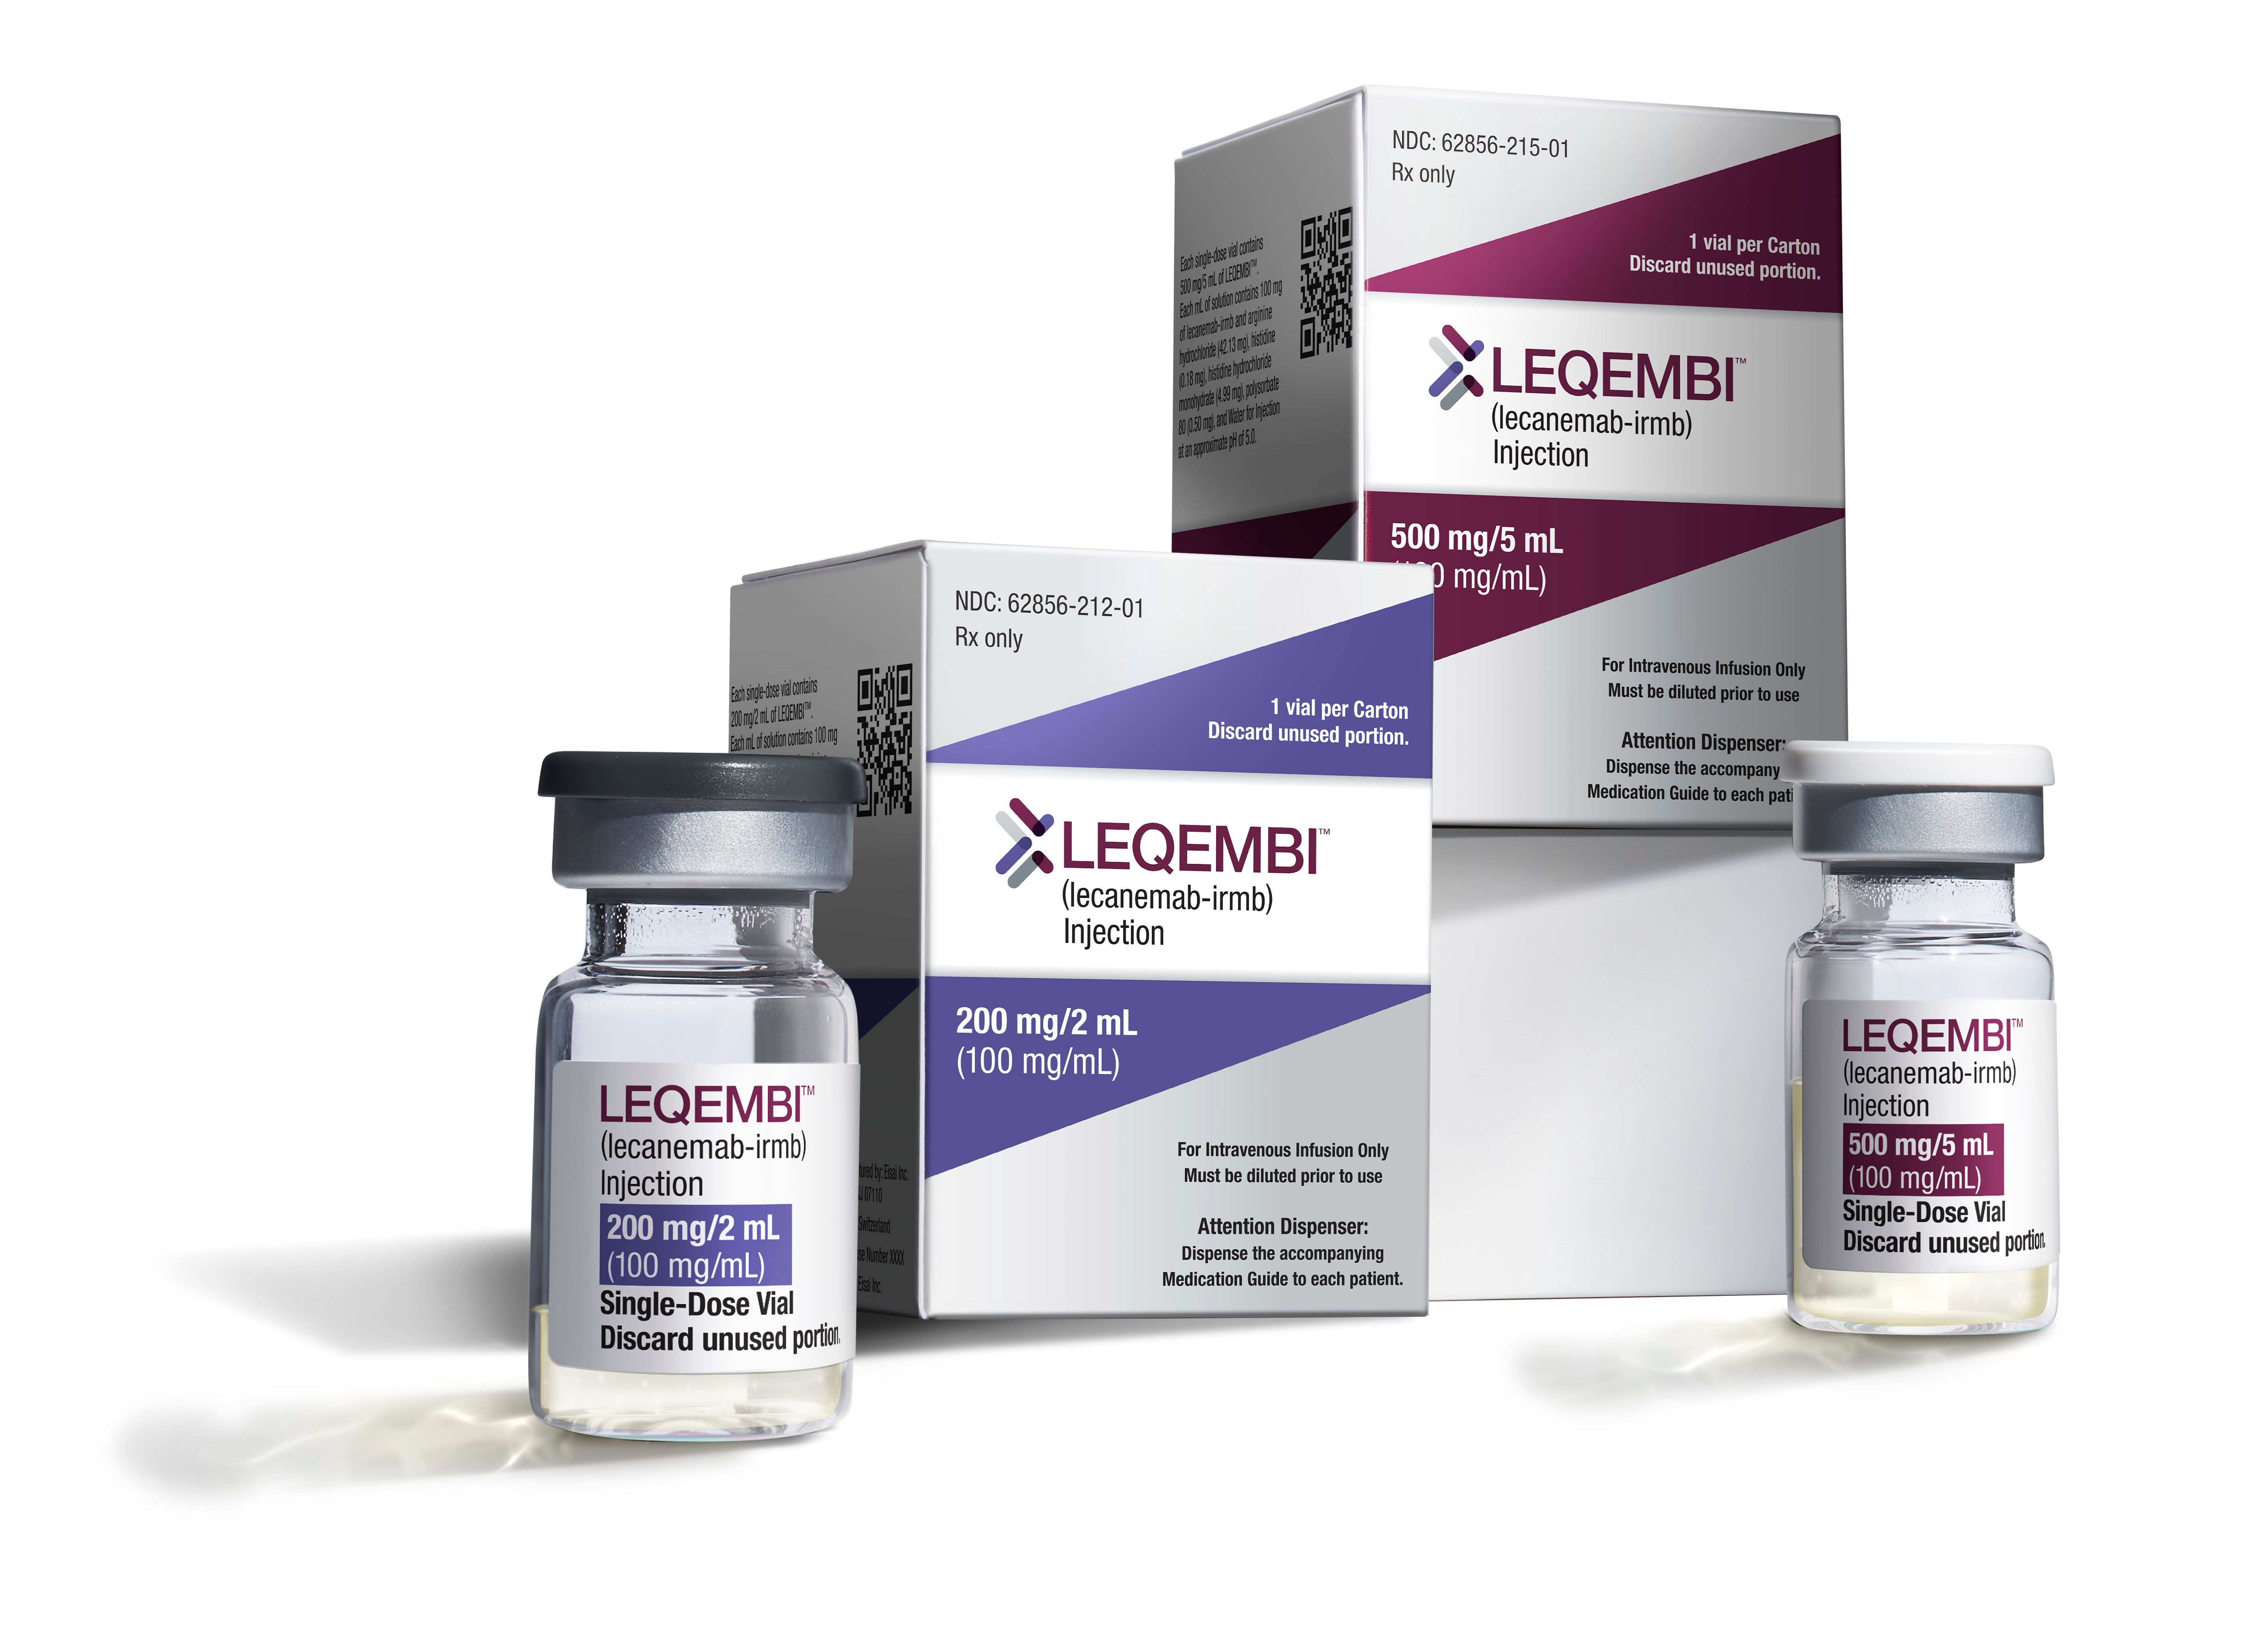 Eisai, Biogen likely to miss early launch goal for Alzheimer's drug Leqembi